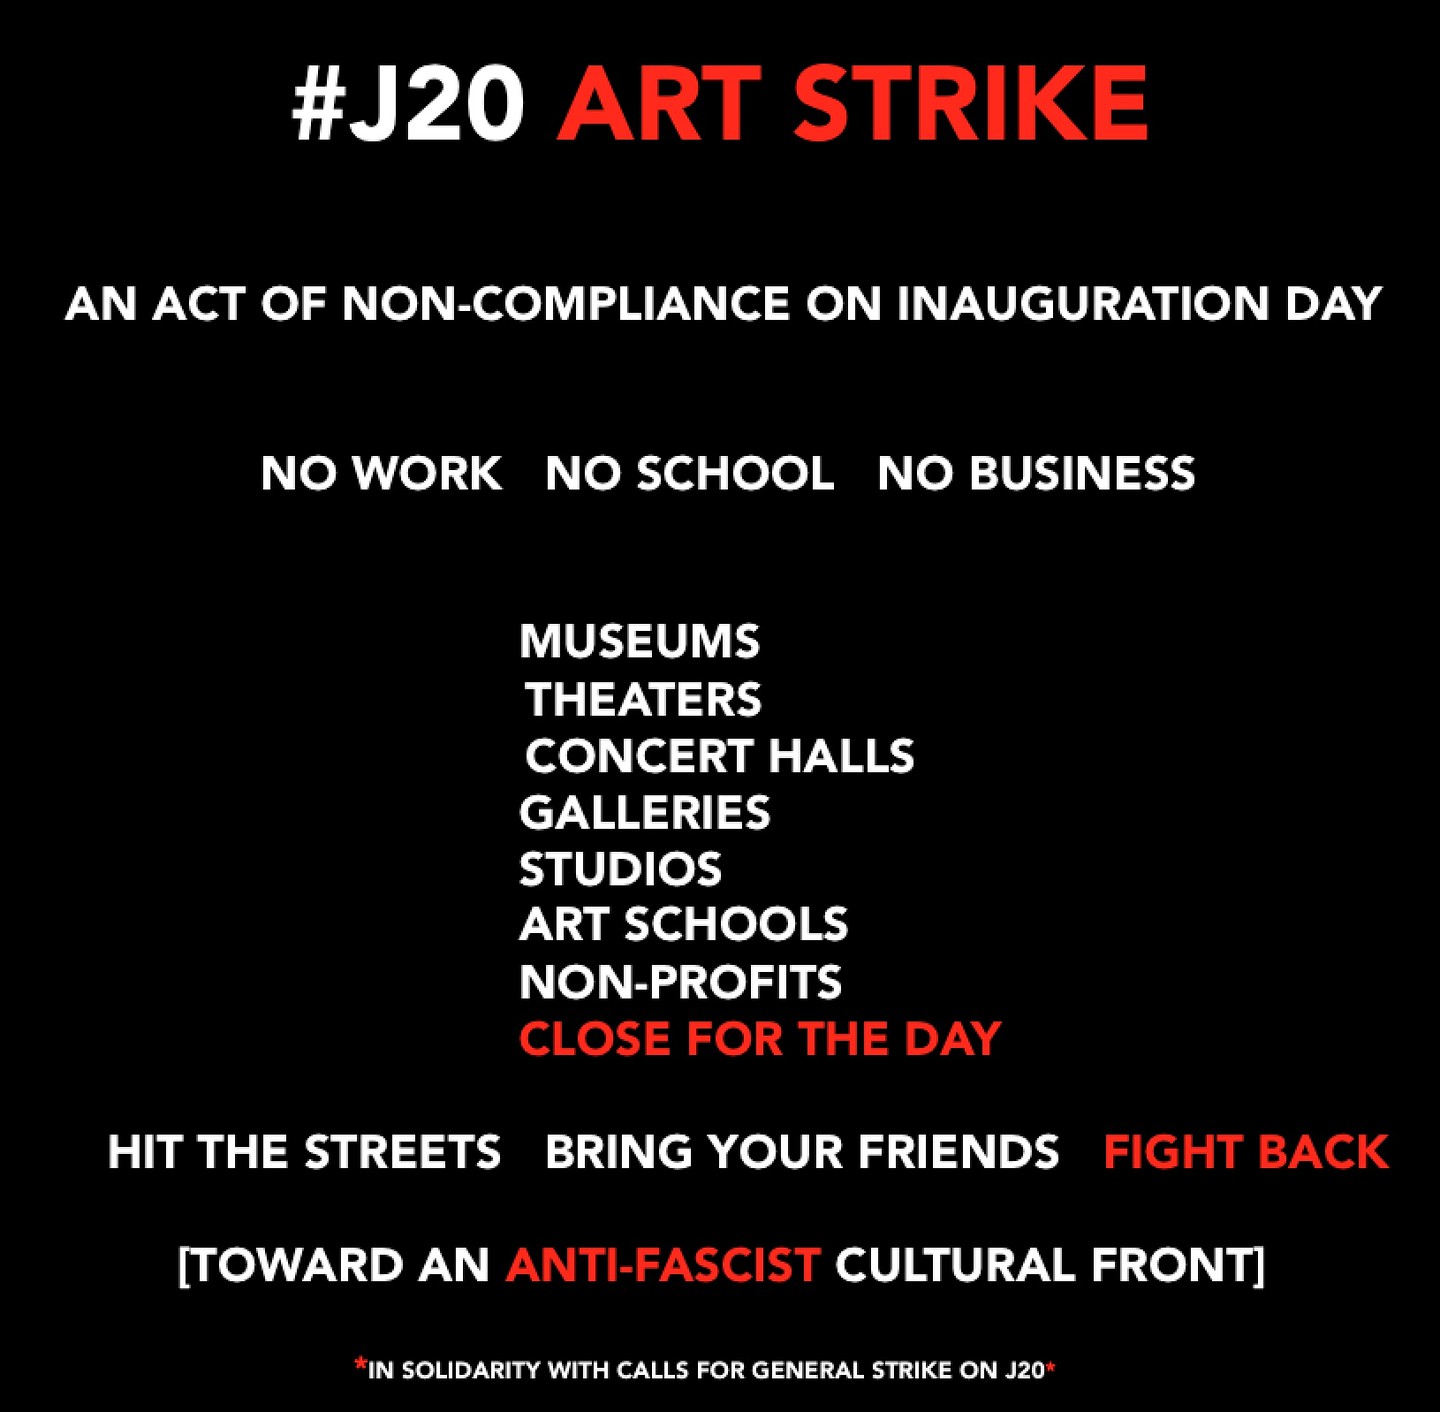 "Art strike" meme